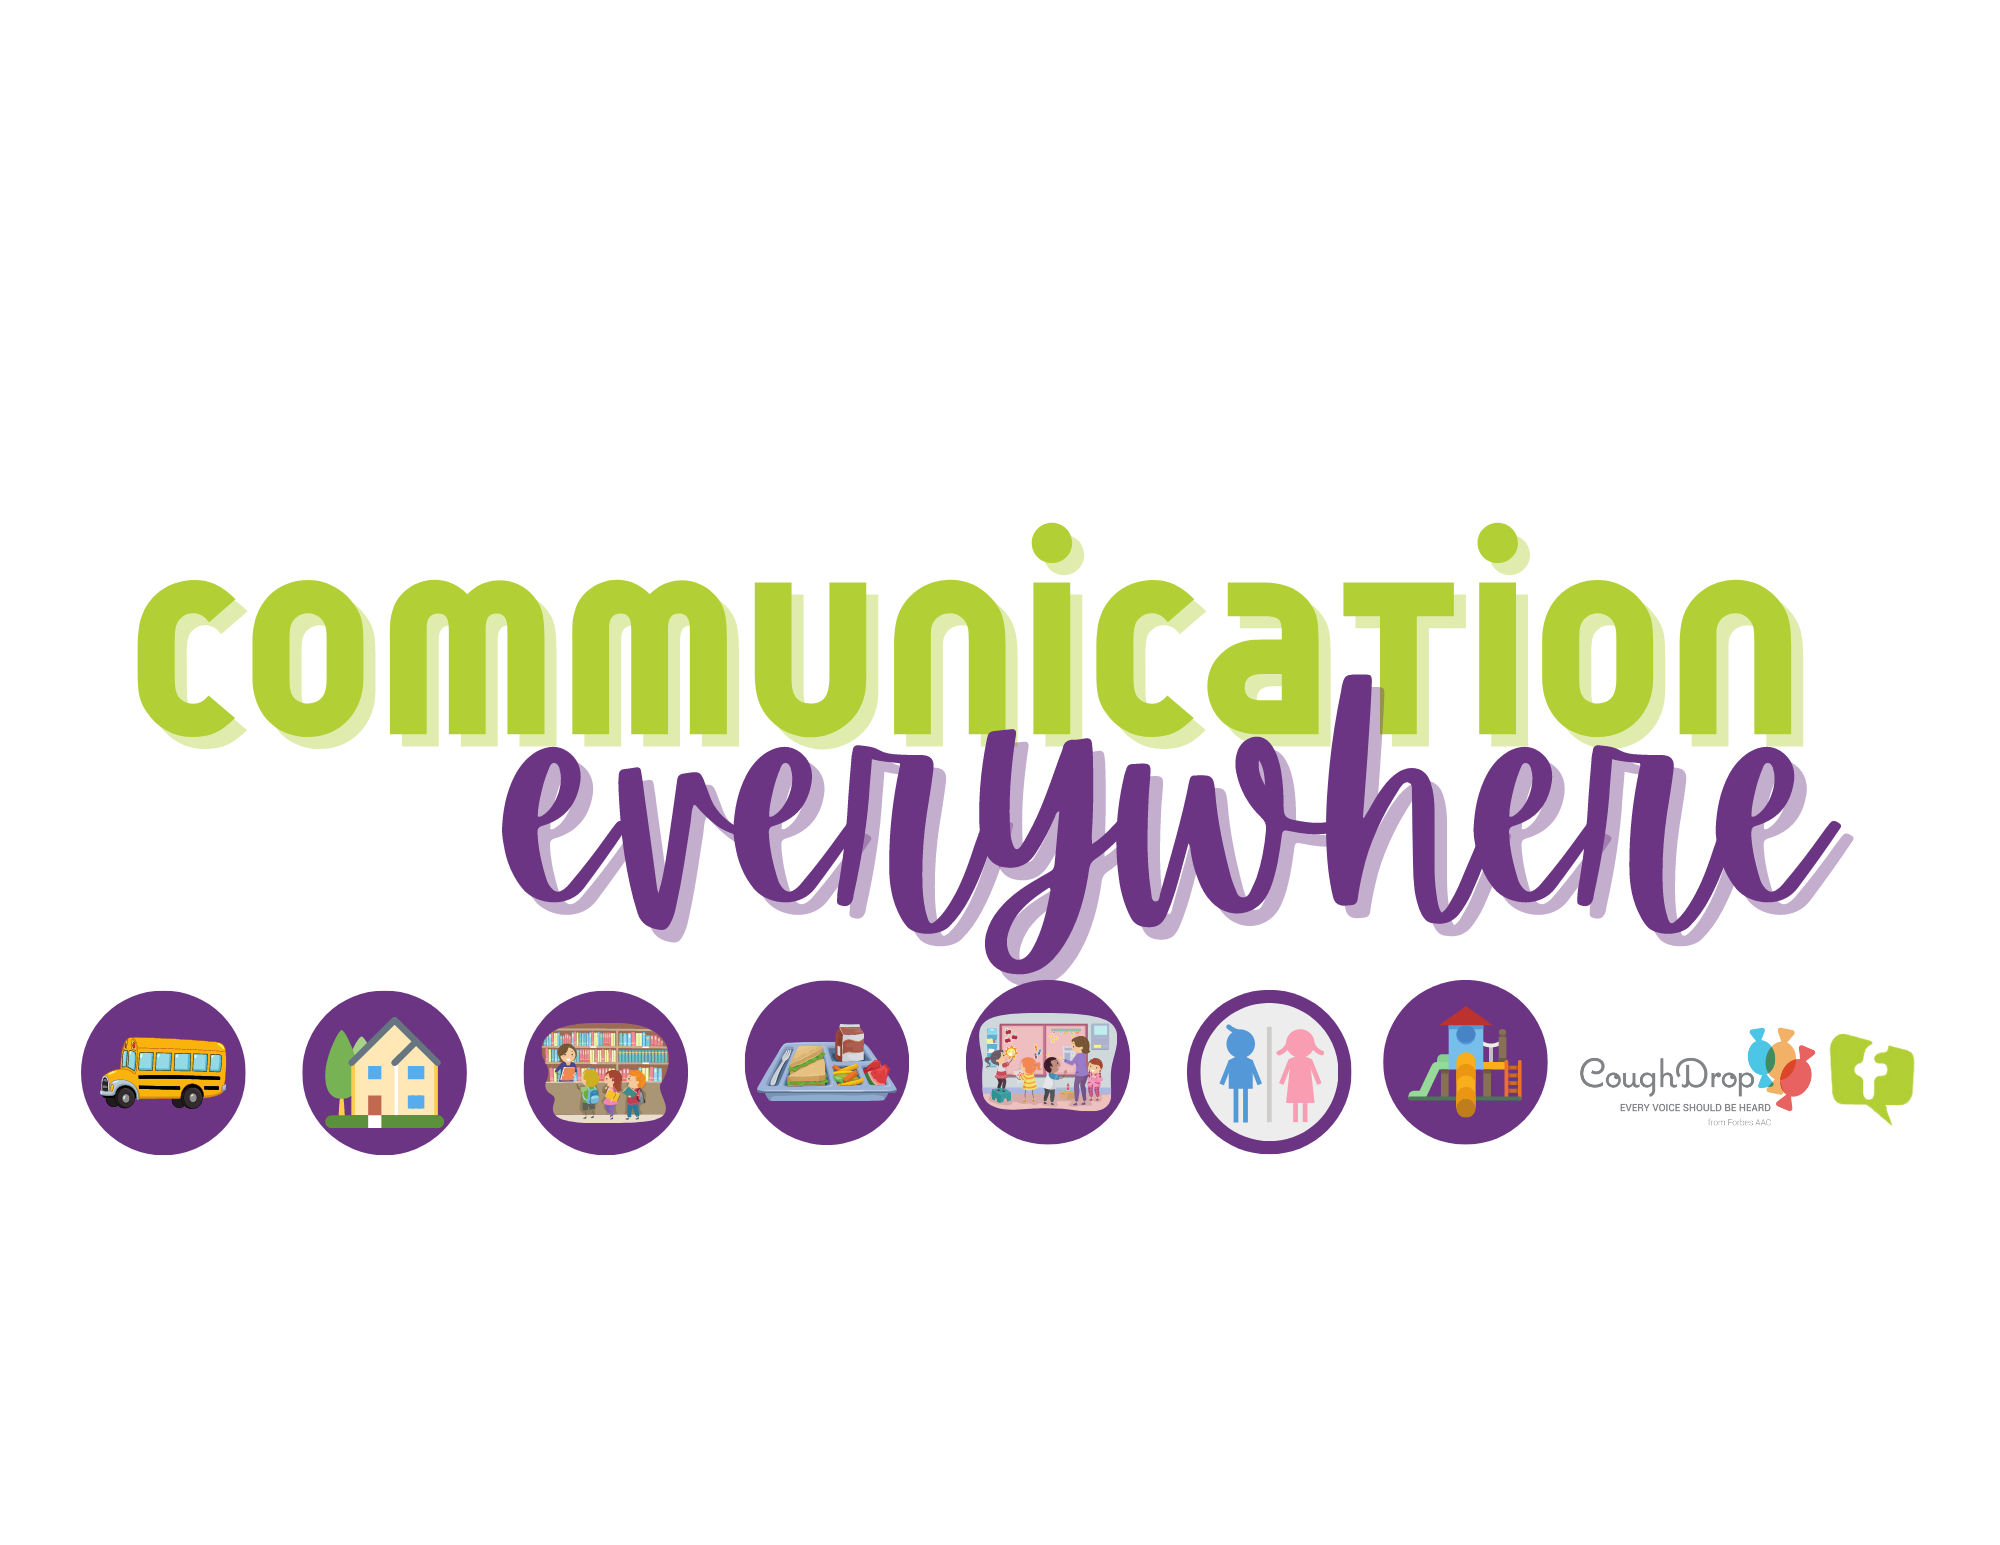 EVERYWHERE Communications